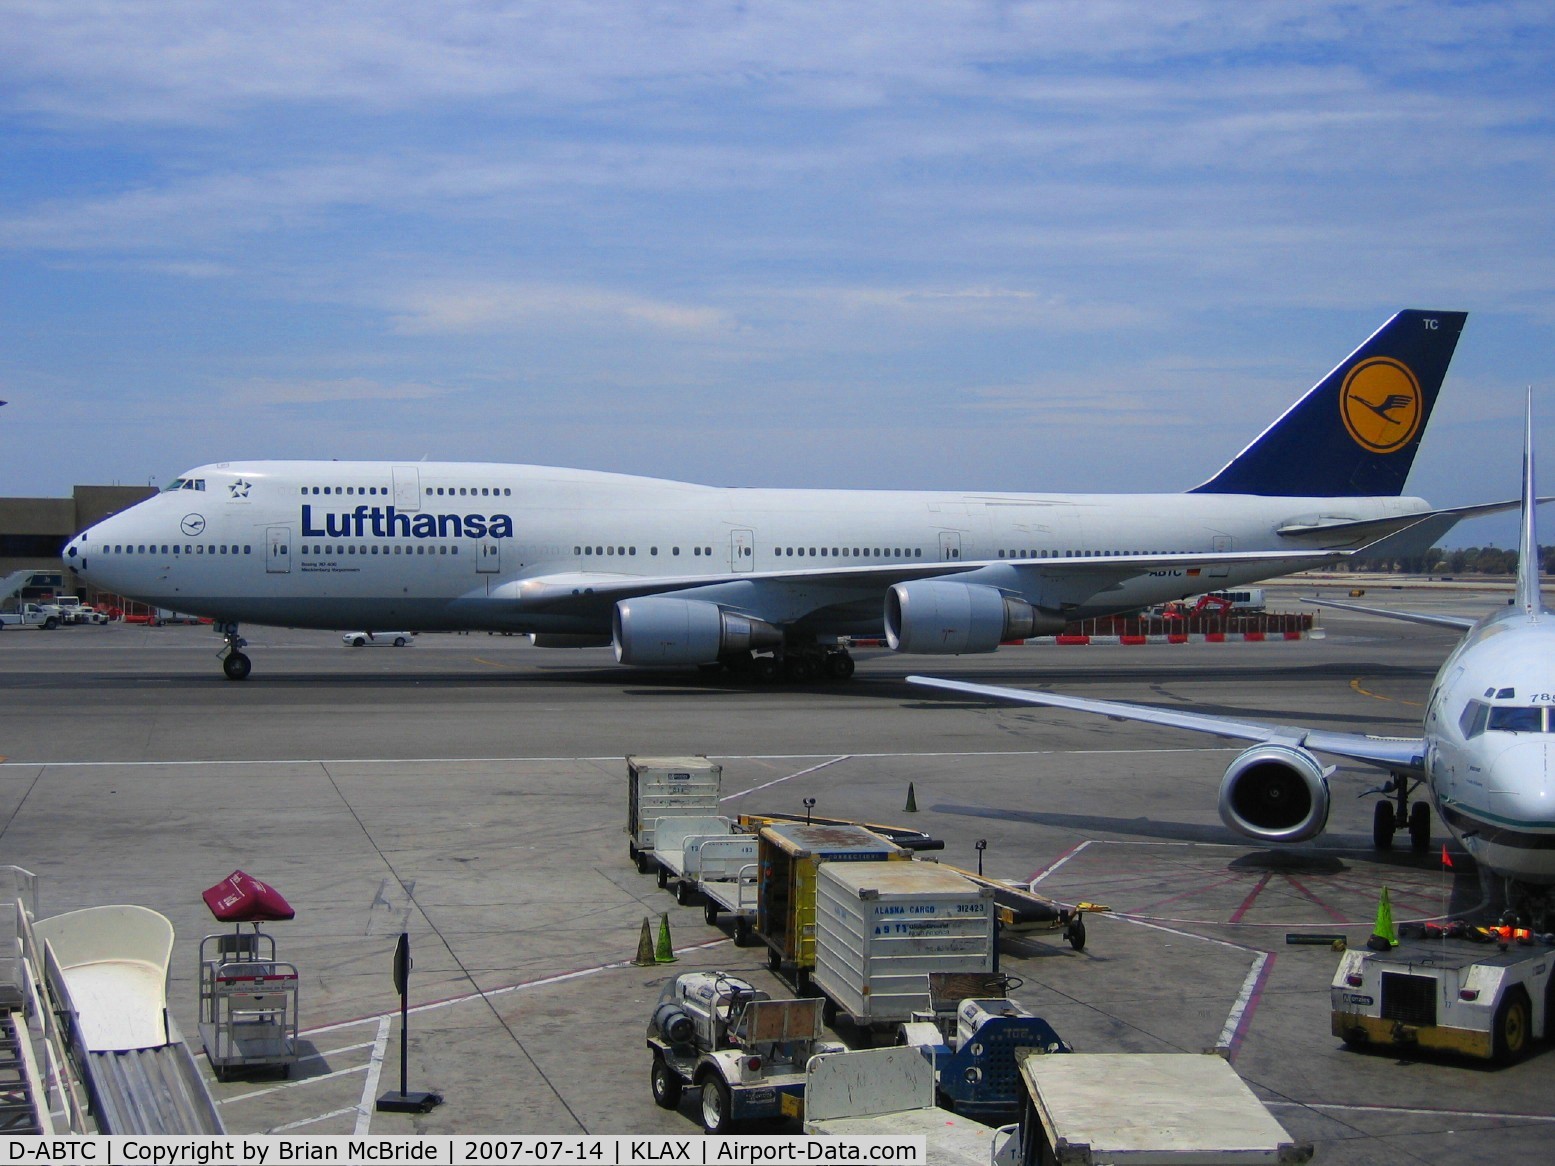 D-ABTC, 1990 Boeing 747-430M C/N 24287, Lufthansa. 747-430M. D-ABTC cn 24287 754. Alaska 737-4Q8 N785AS to her right. Los Angeles - International (LAX KLAX). Image © Brian McBride. 14 July 2007